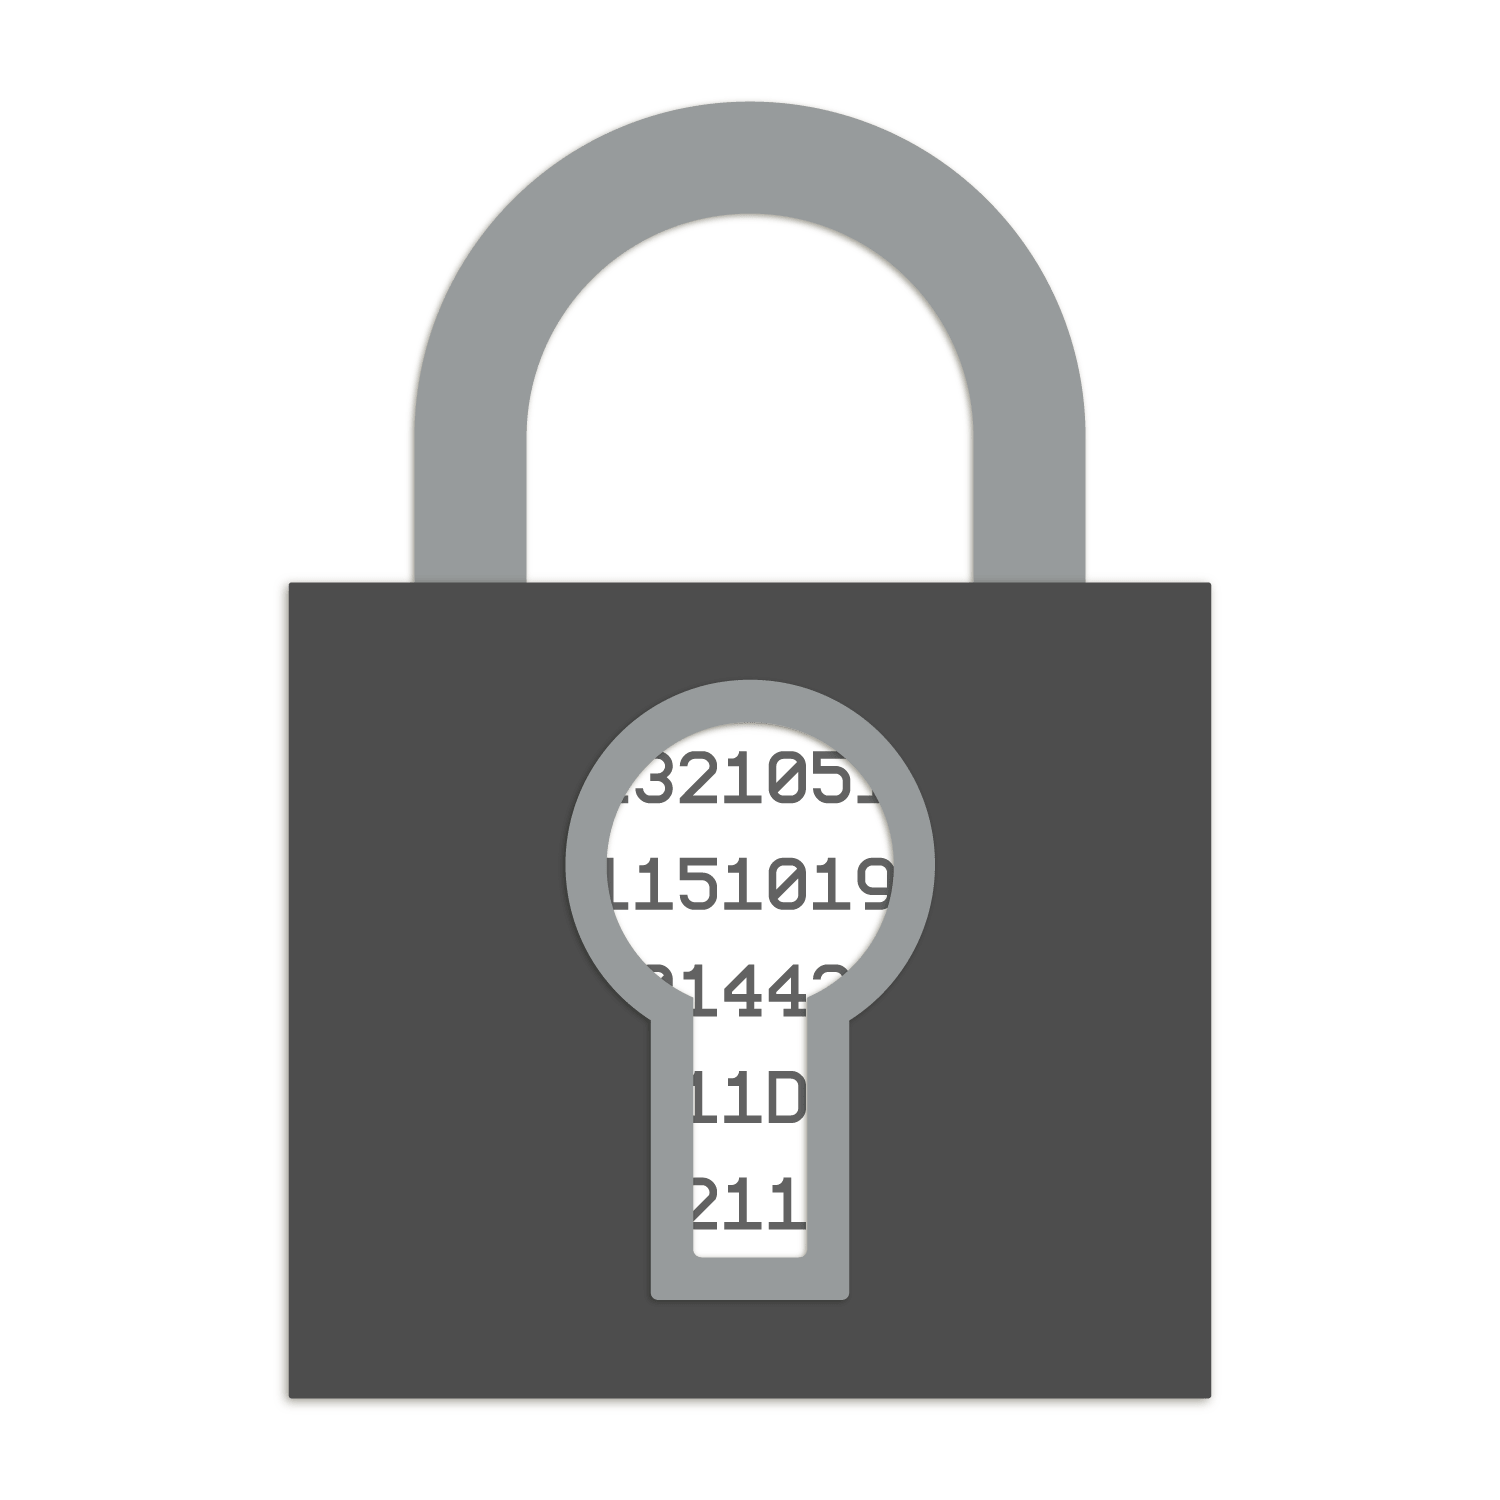 Encrypted lock